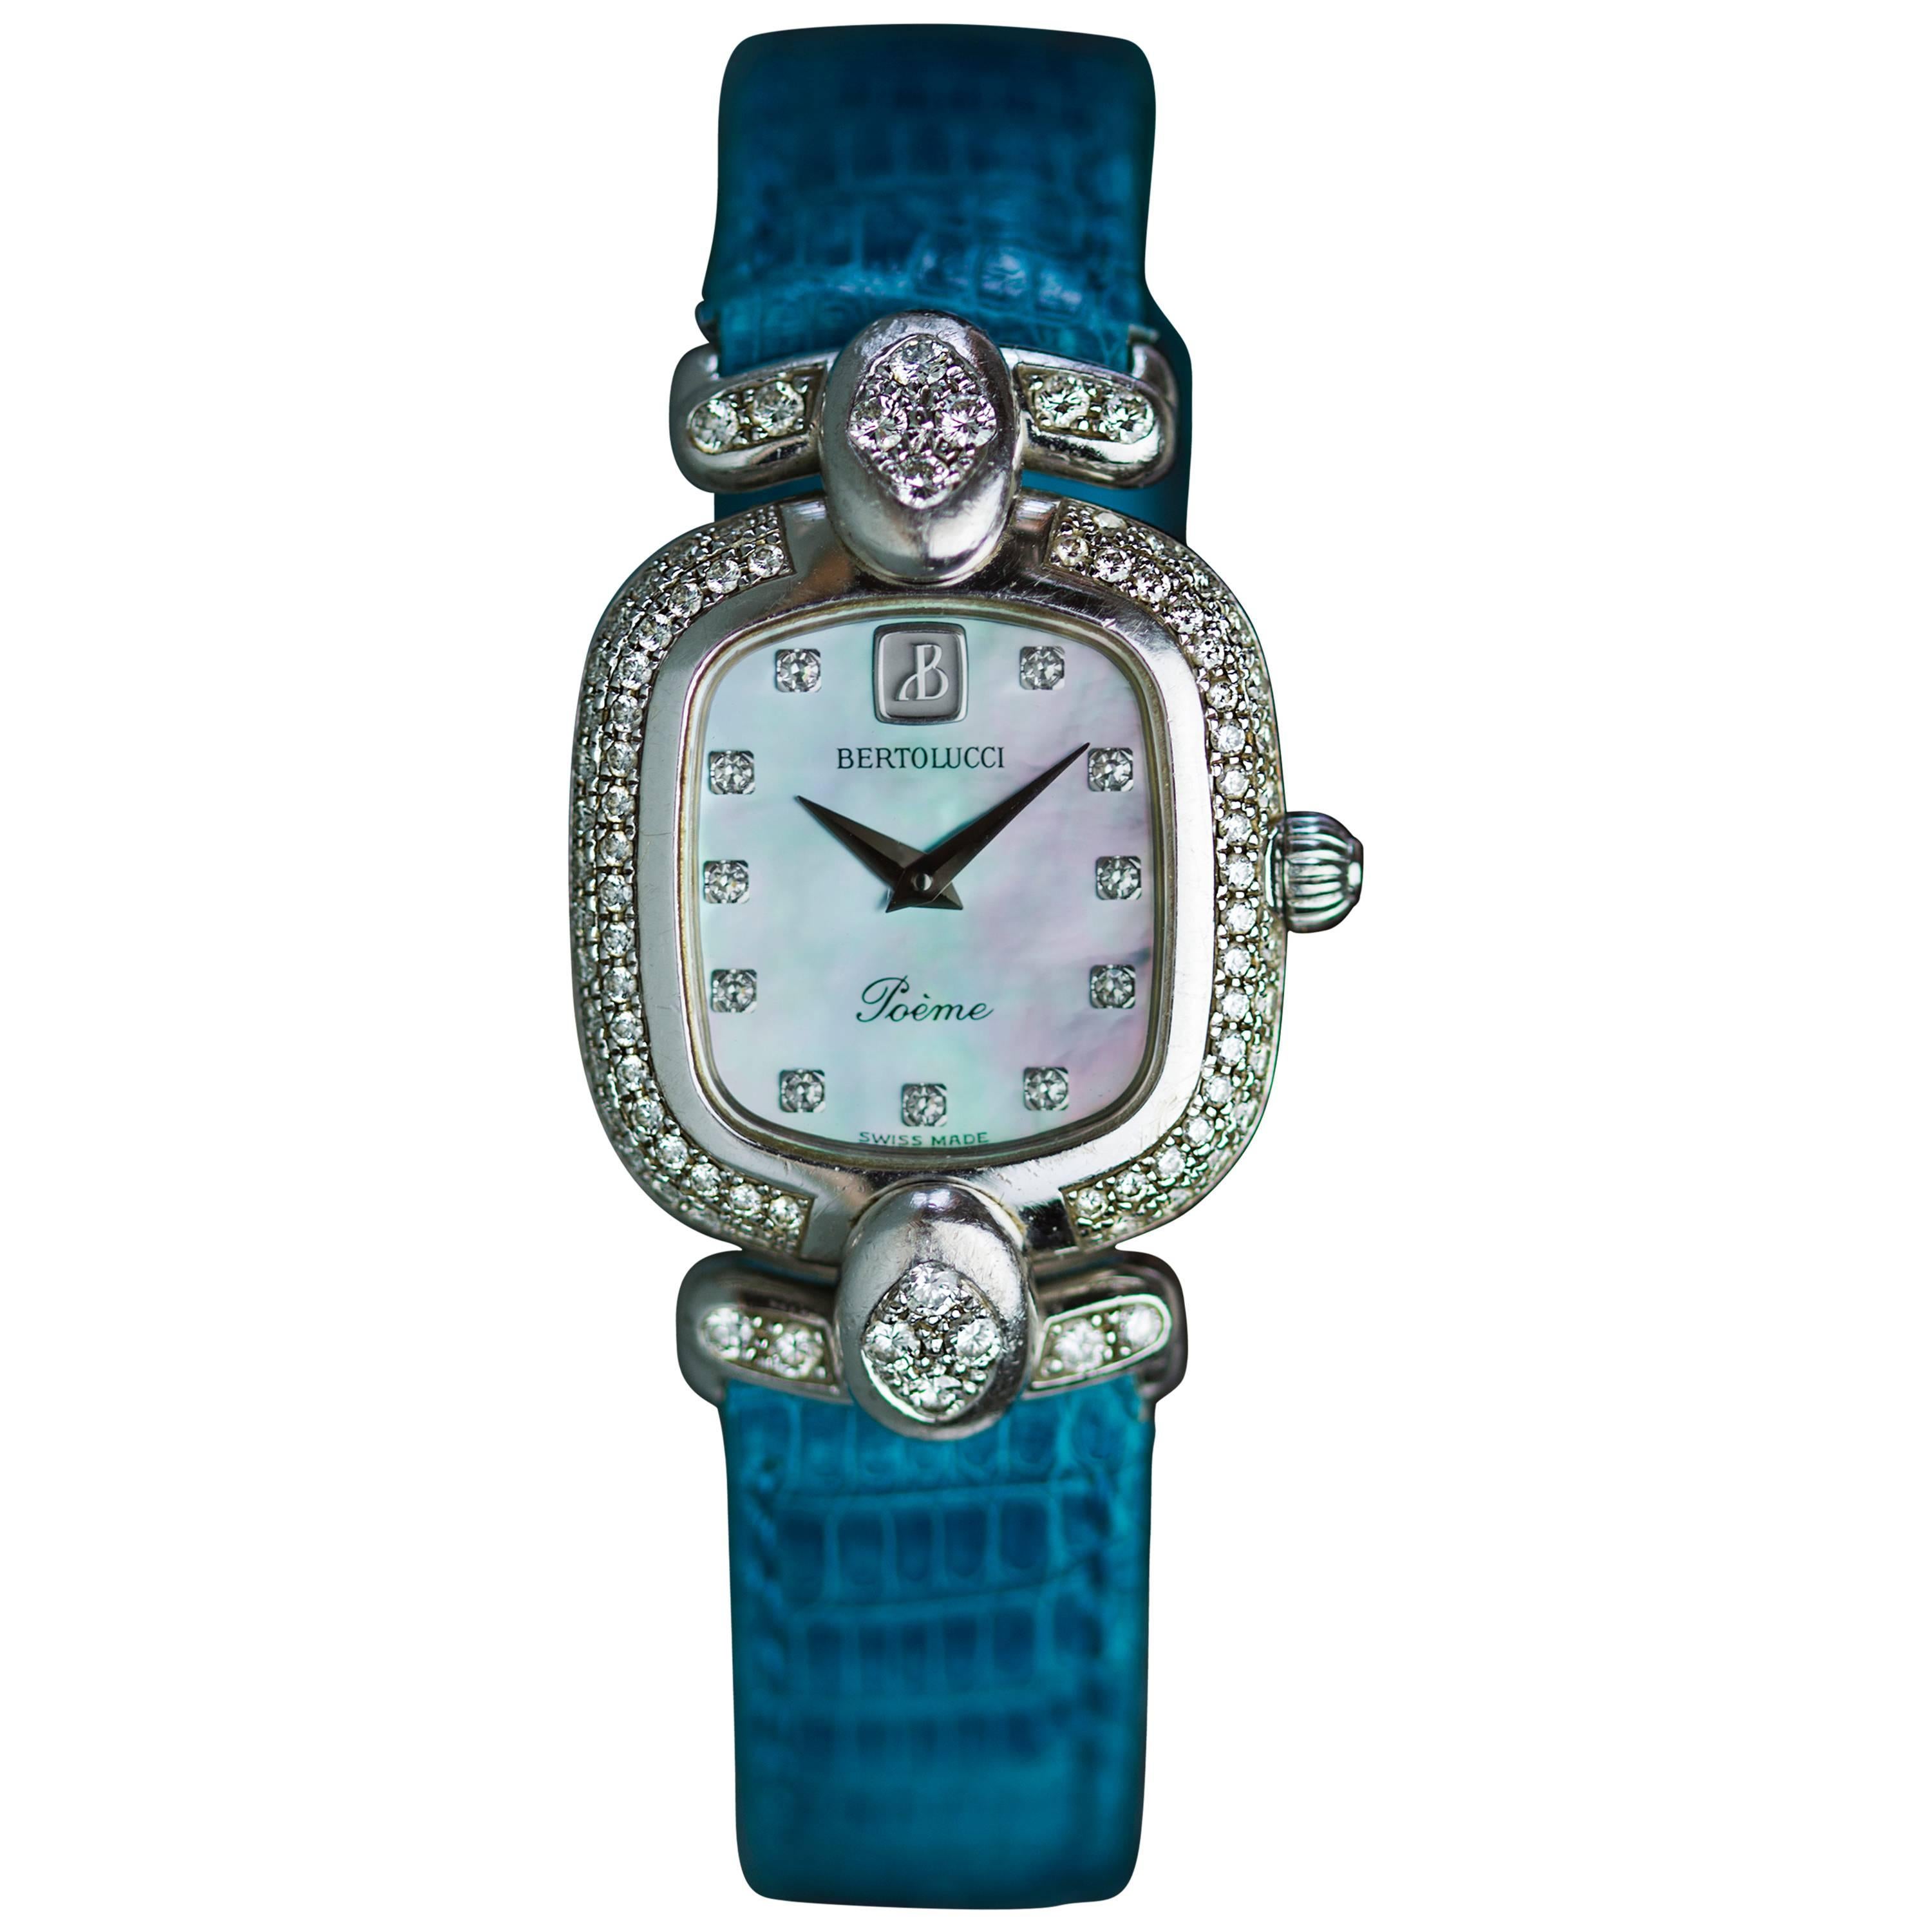 Bertolucci Ladies White Gold Diamond Limited Edition Poeme Quartz Wristwatch